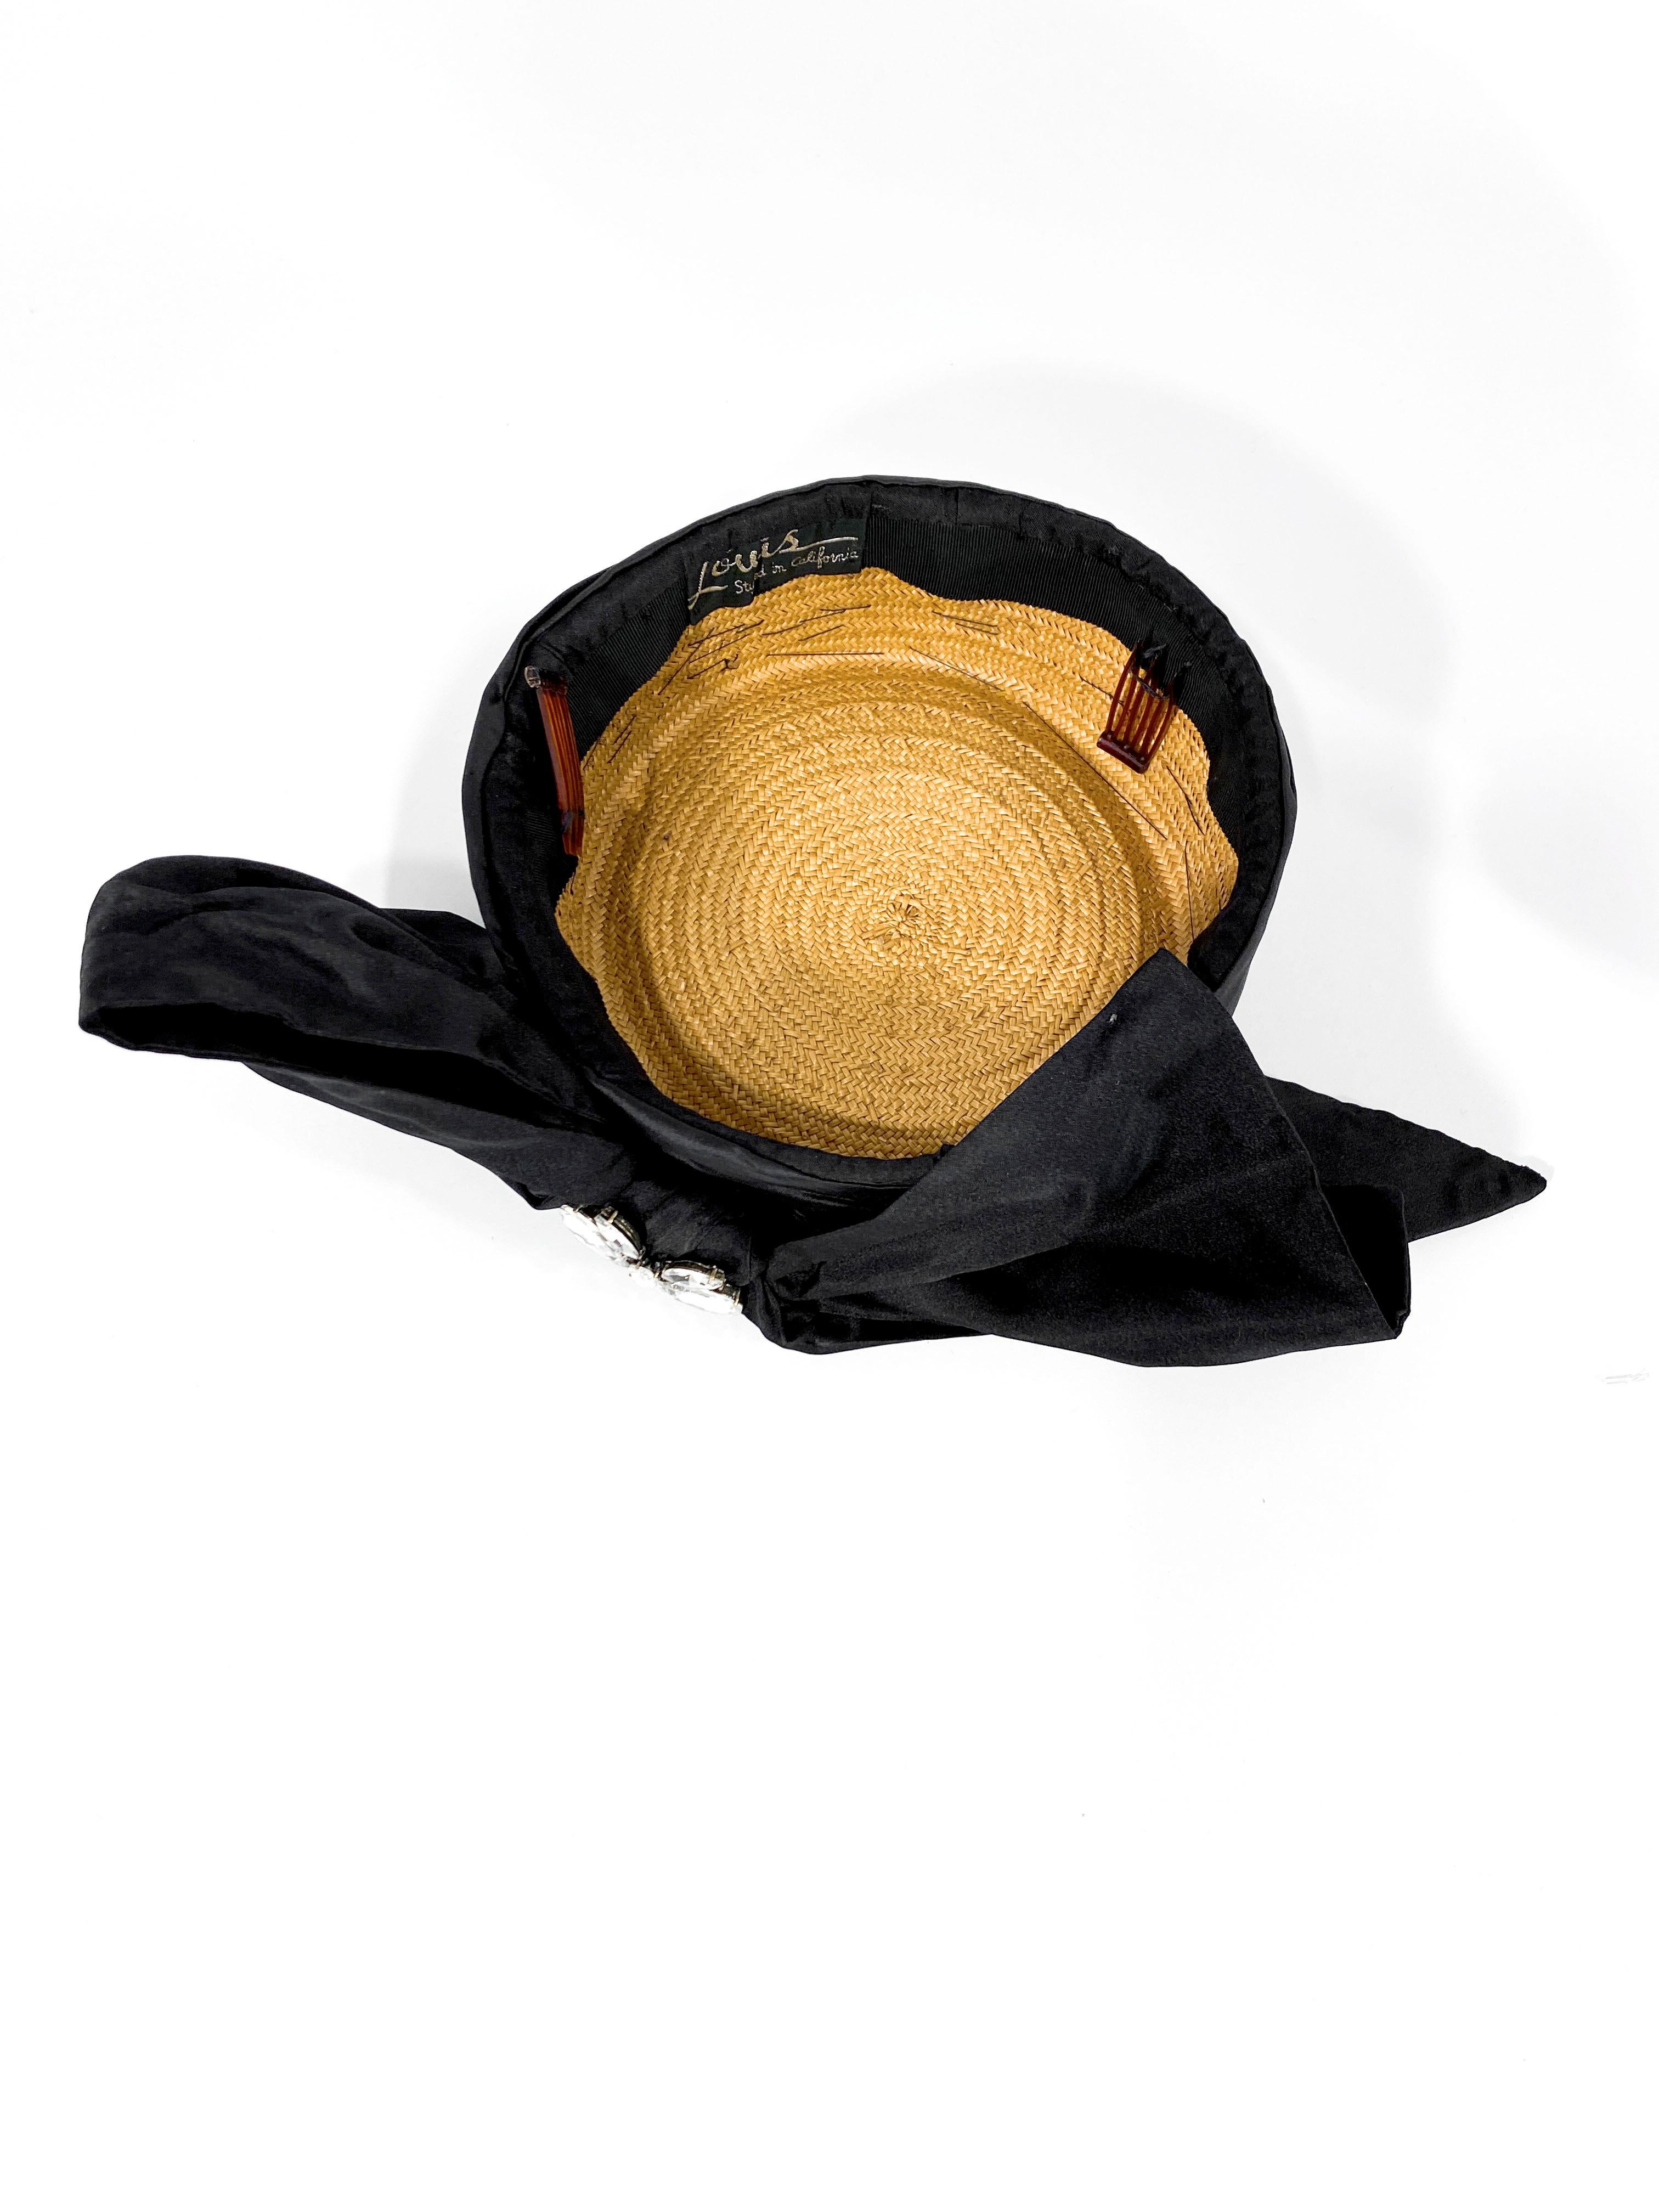 1960s I. Magnin Black Silk Fashion Pillbox Hat For Sale 1